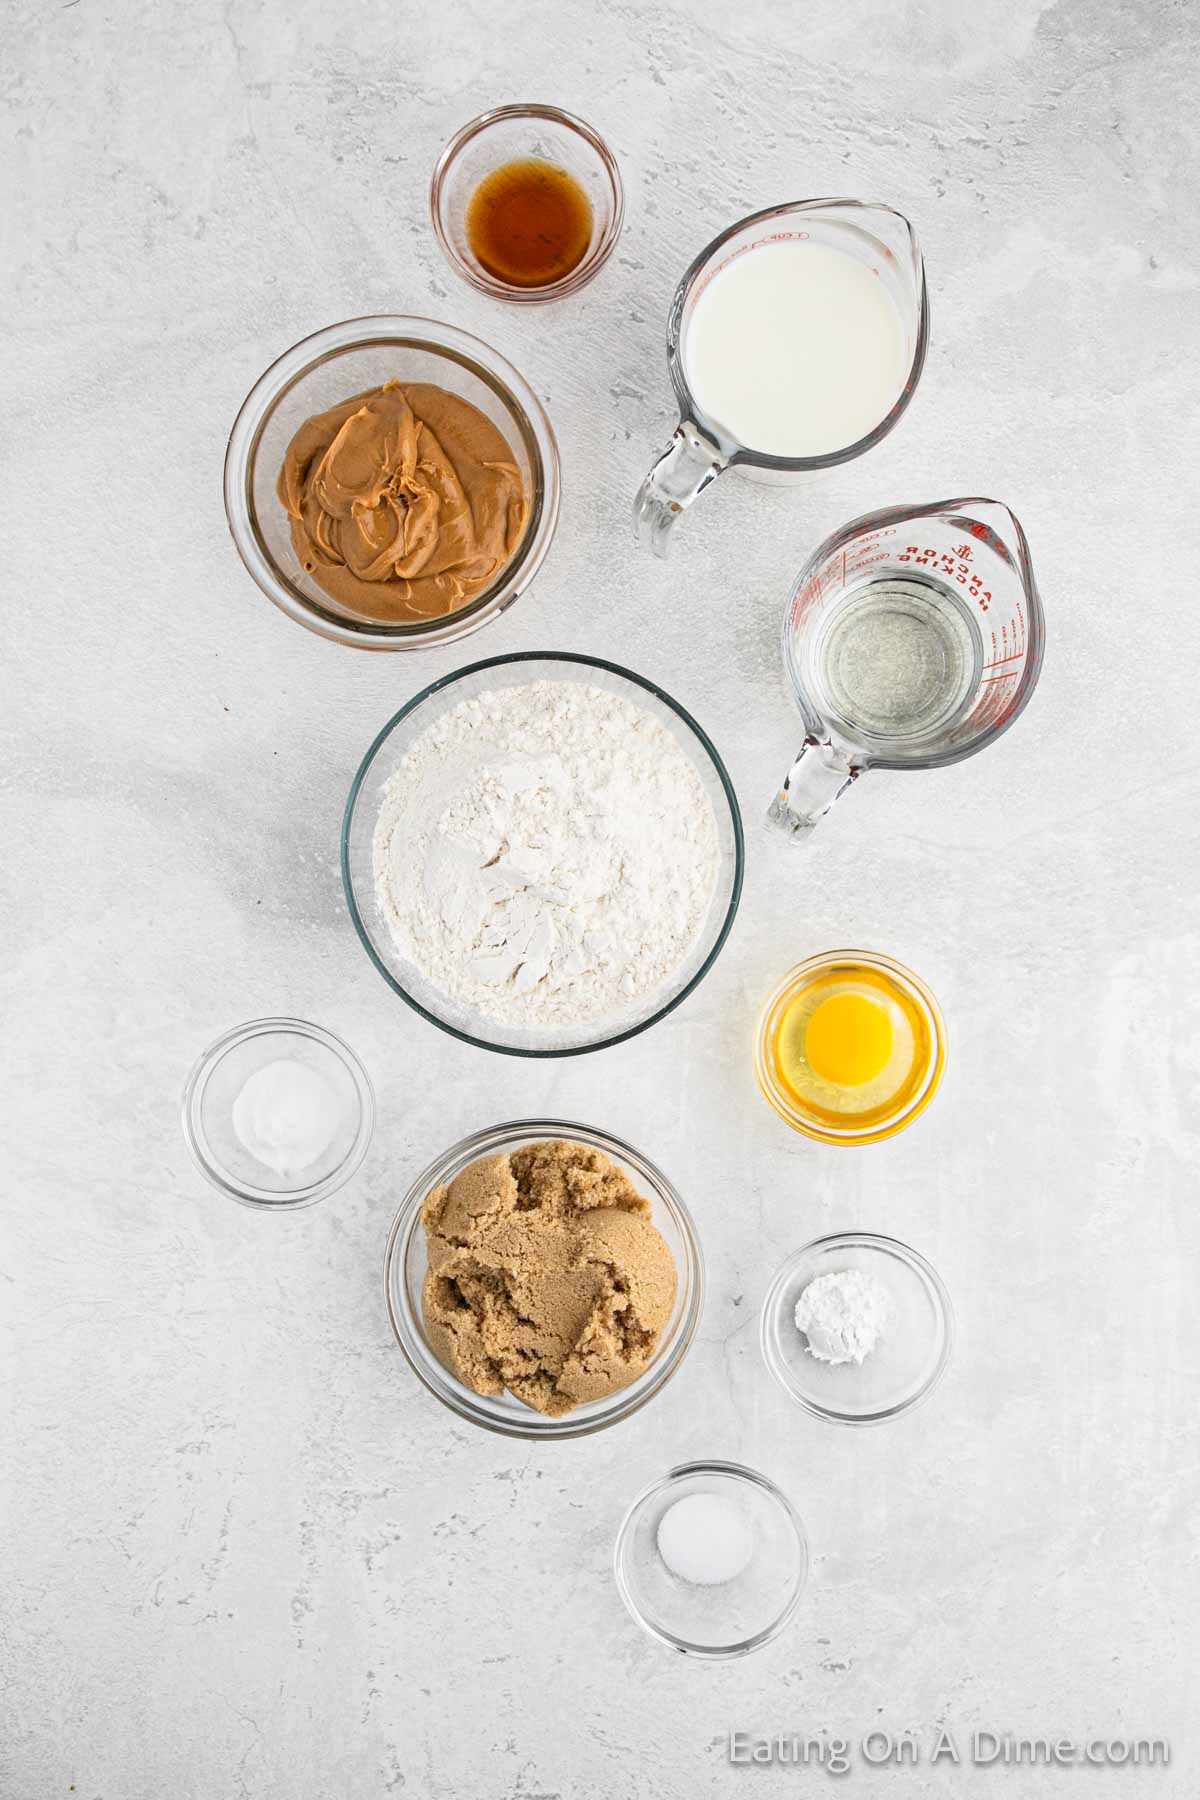 Peanut butter muffin ingredients - flour, baking powder, baking soda, salt, brown sugar, egg, peanut butter, oil, milk, vanilla extract